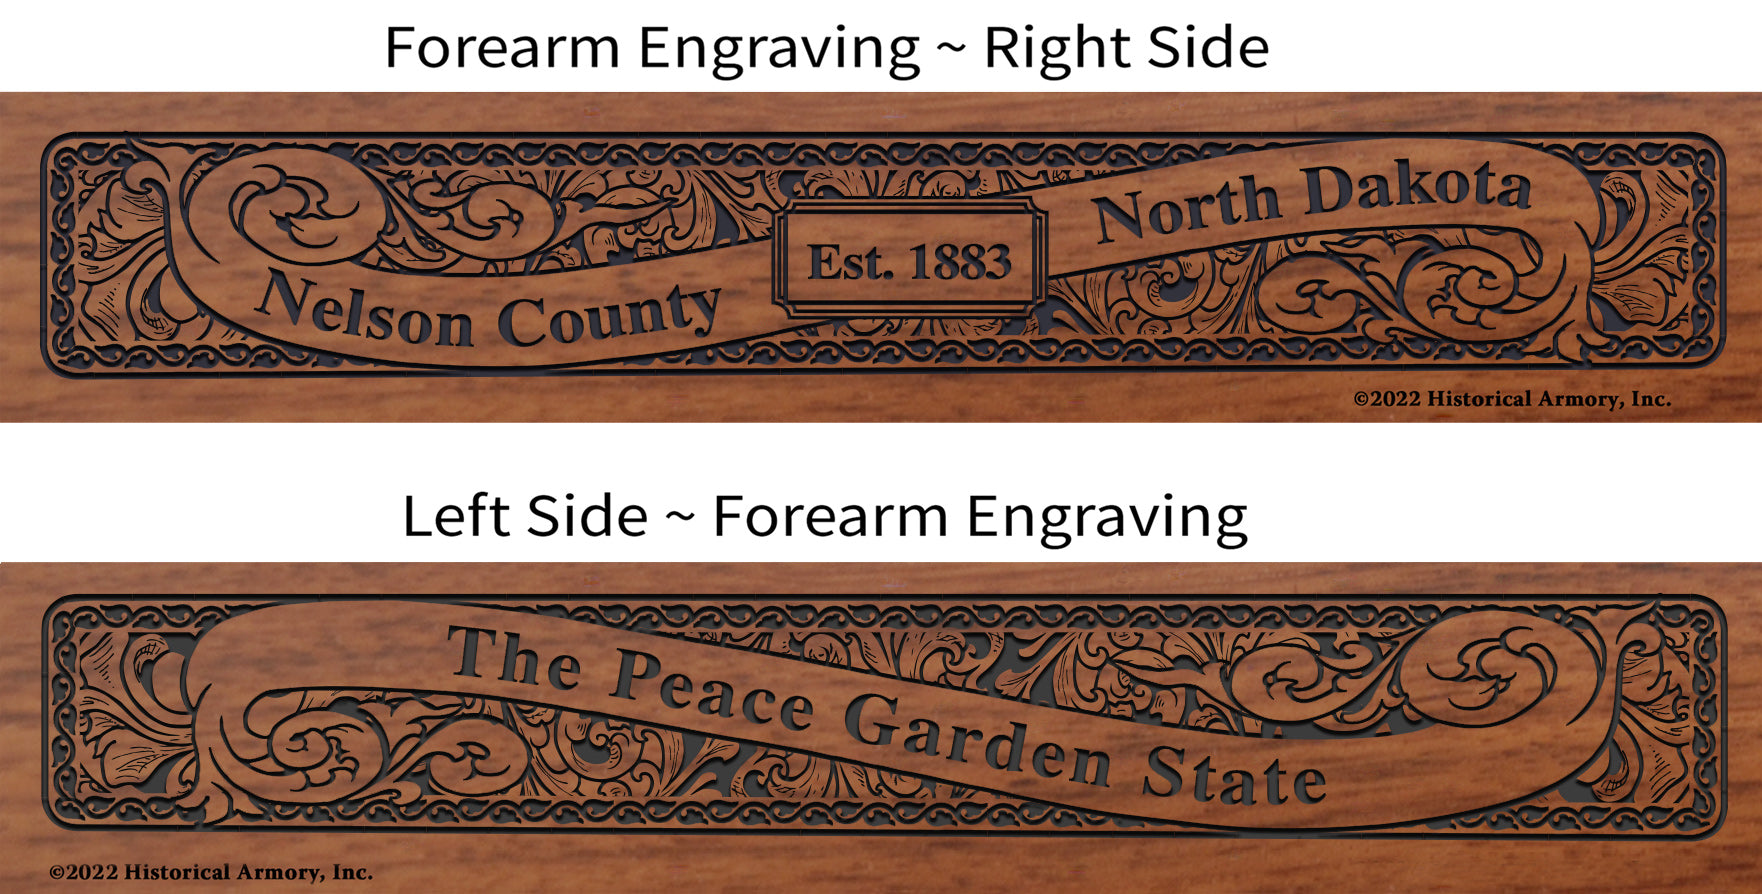 Nelson County North Dakota Engraved Rifle Forearm